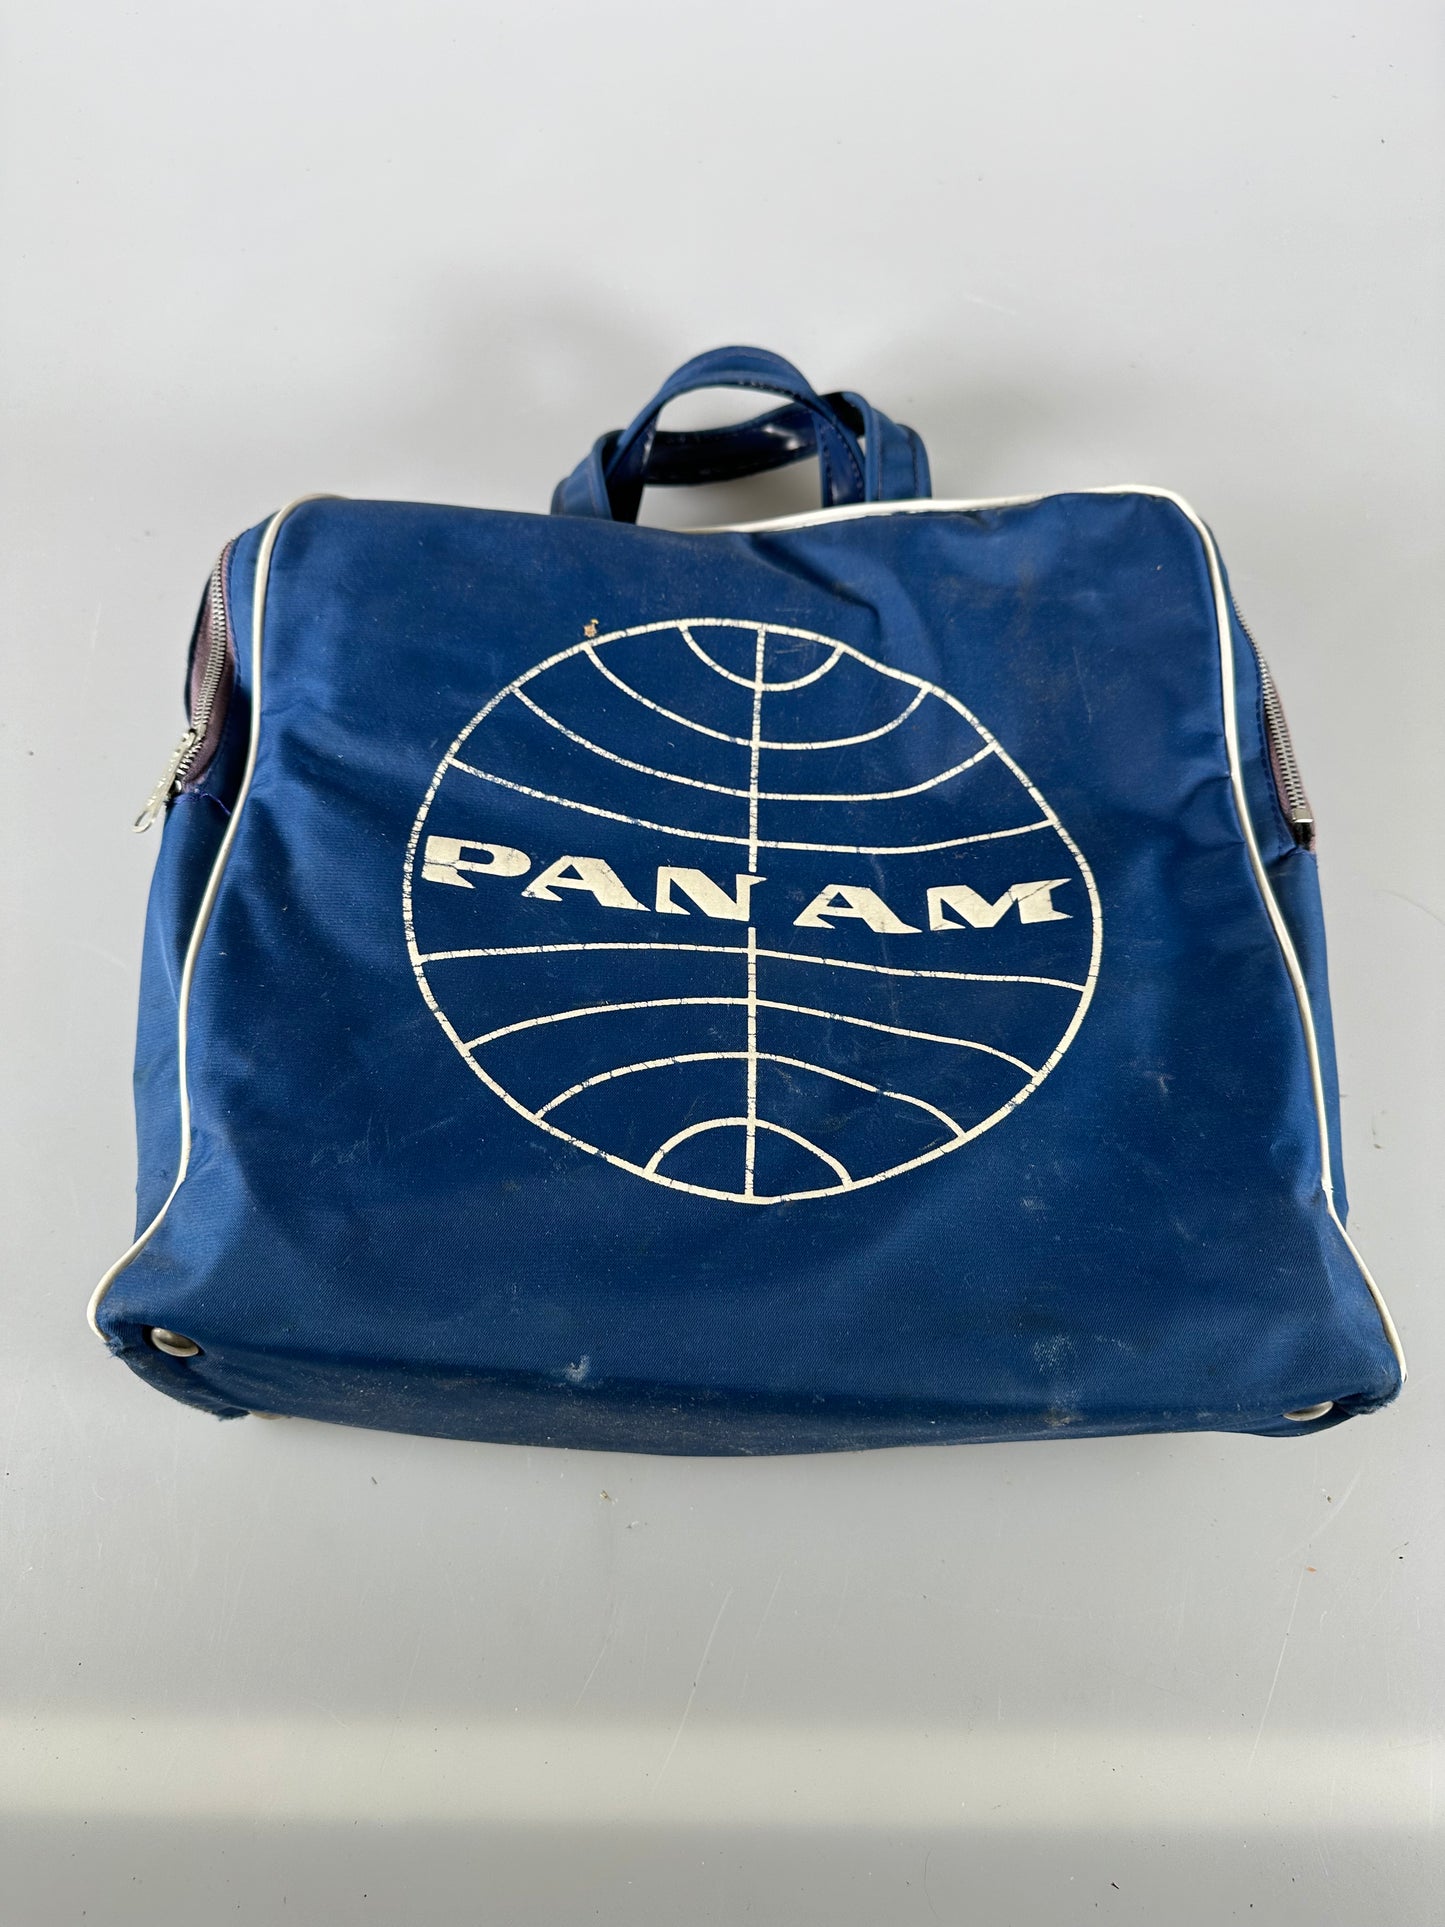 Vintage PAM AM Airline Flight Attendant CARRY ON BAG Tote Light Blue